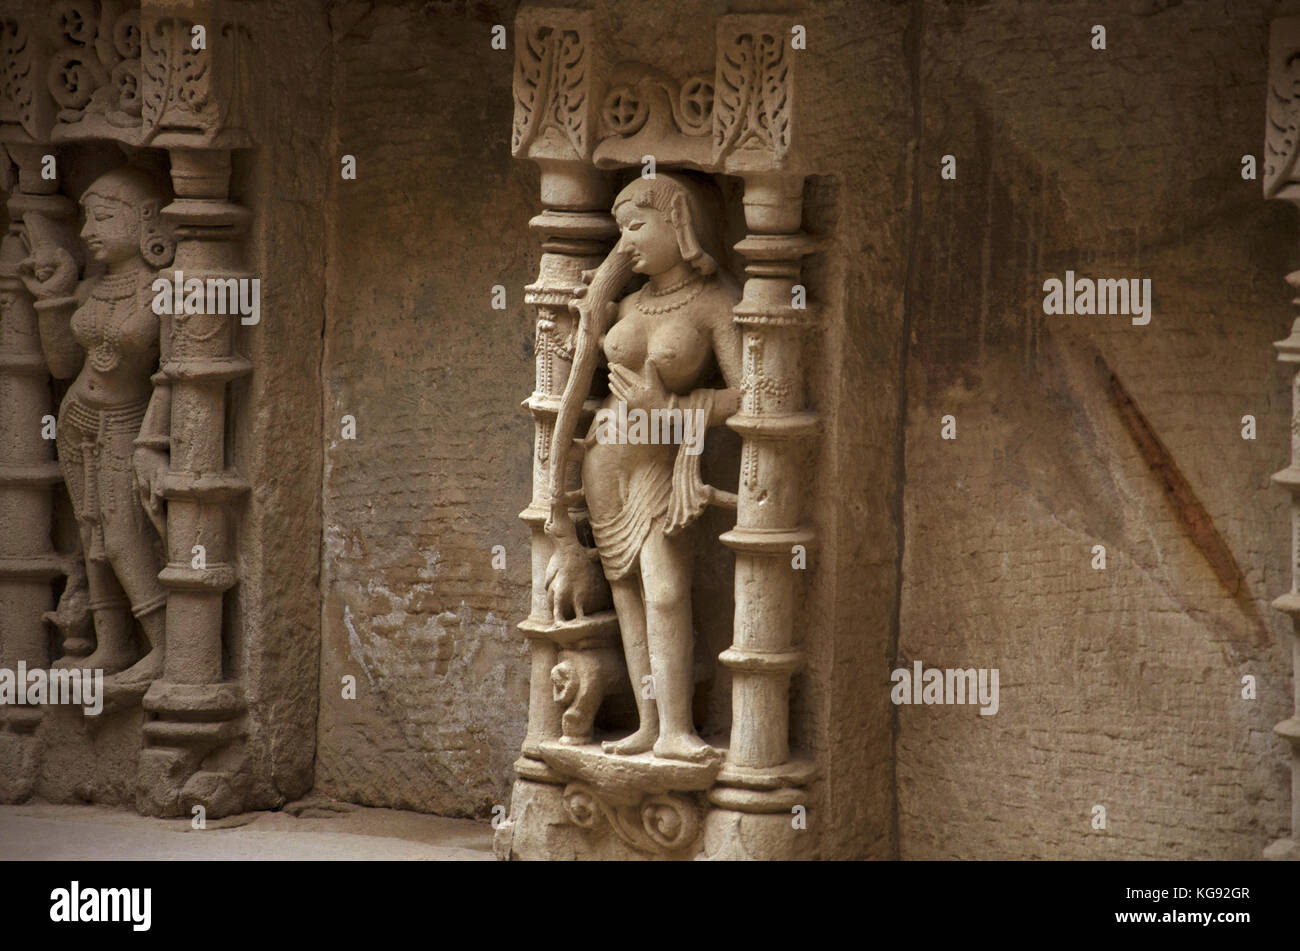 Carving details of an idol of apsara, located on the inner wall of Rani ki vav.  Patan, Gujarat, India. Stock Photo